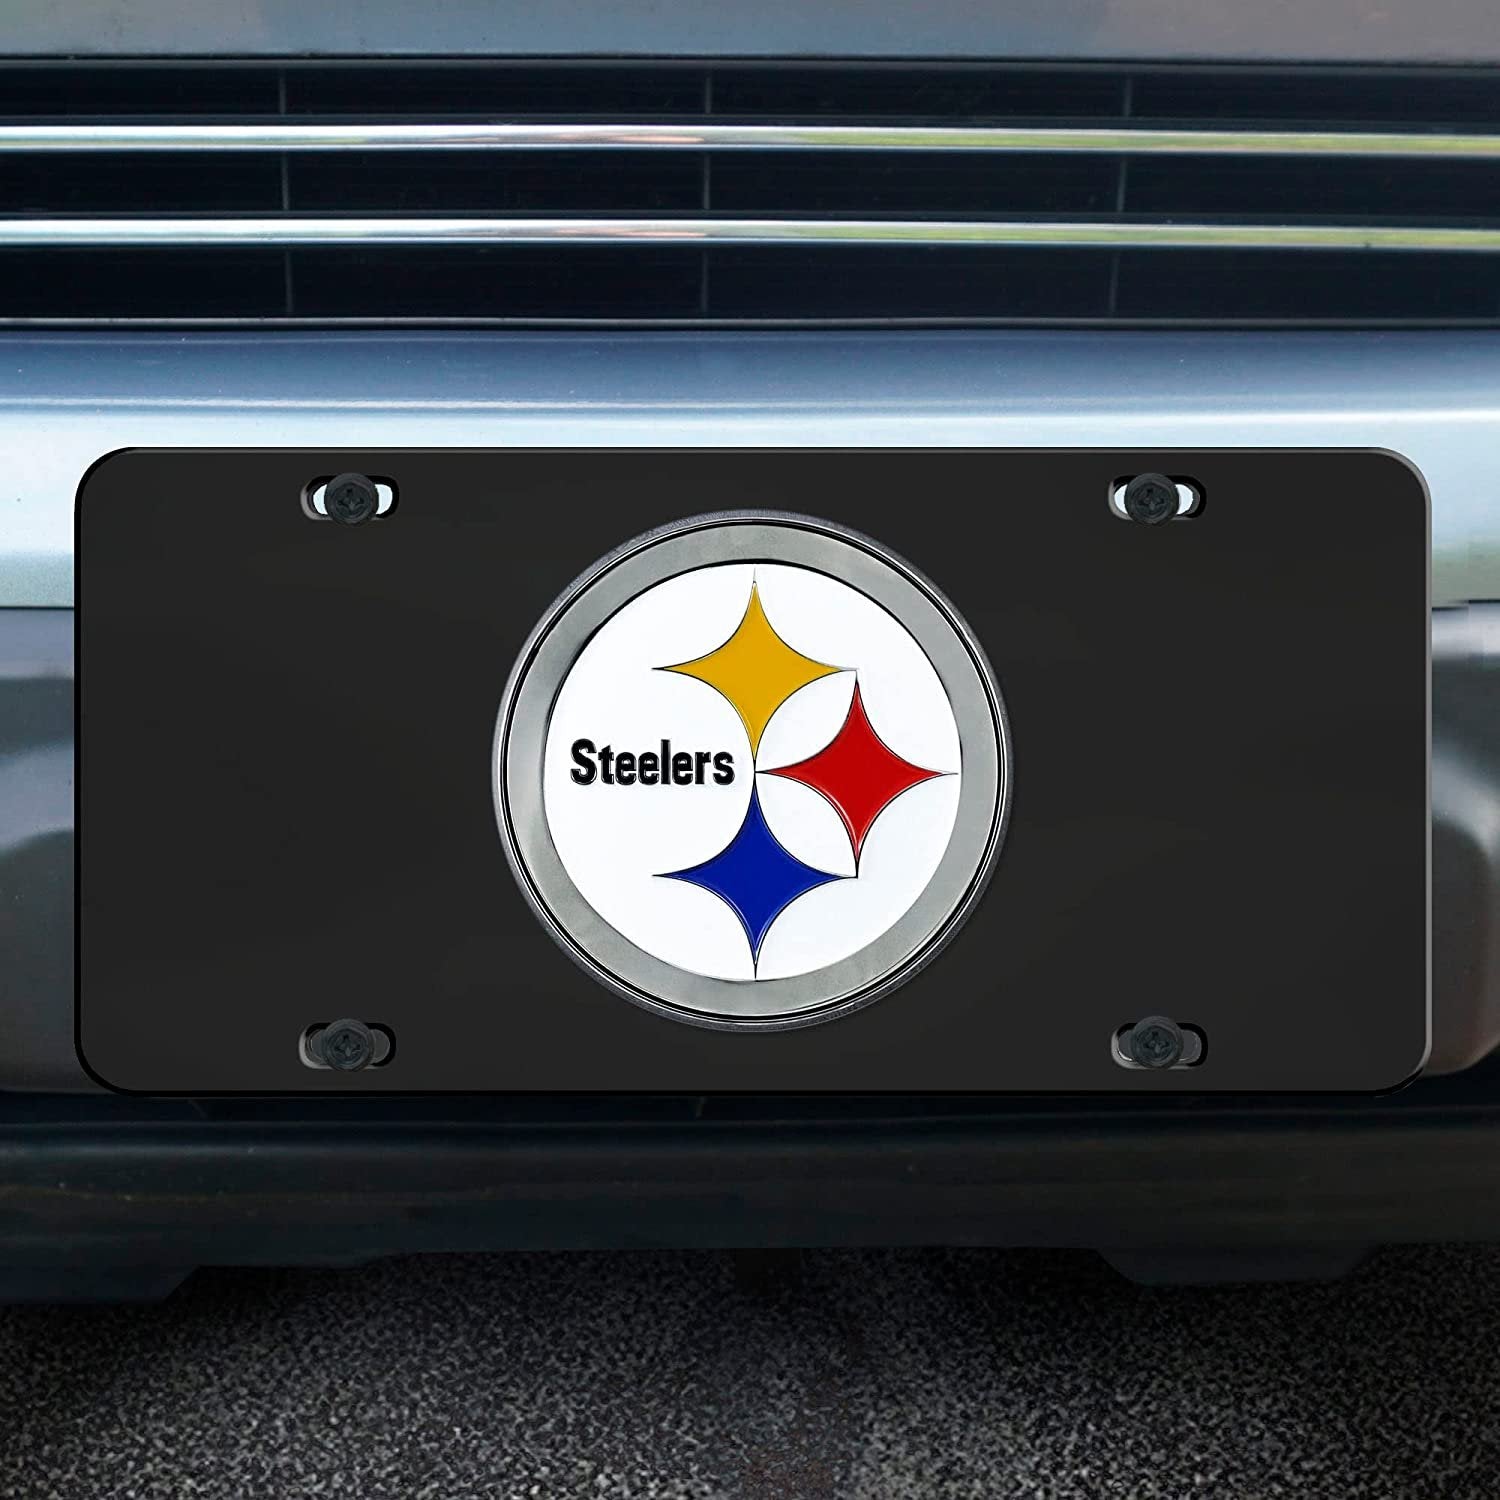 Pittsburgh Steelers License Plate Tag, Premium Stainless Steel Diecast, Black, Raised Solid Metal Color Emblem, 6x12 Inch